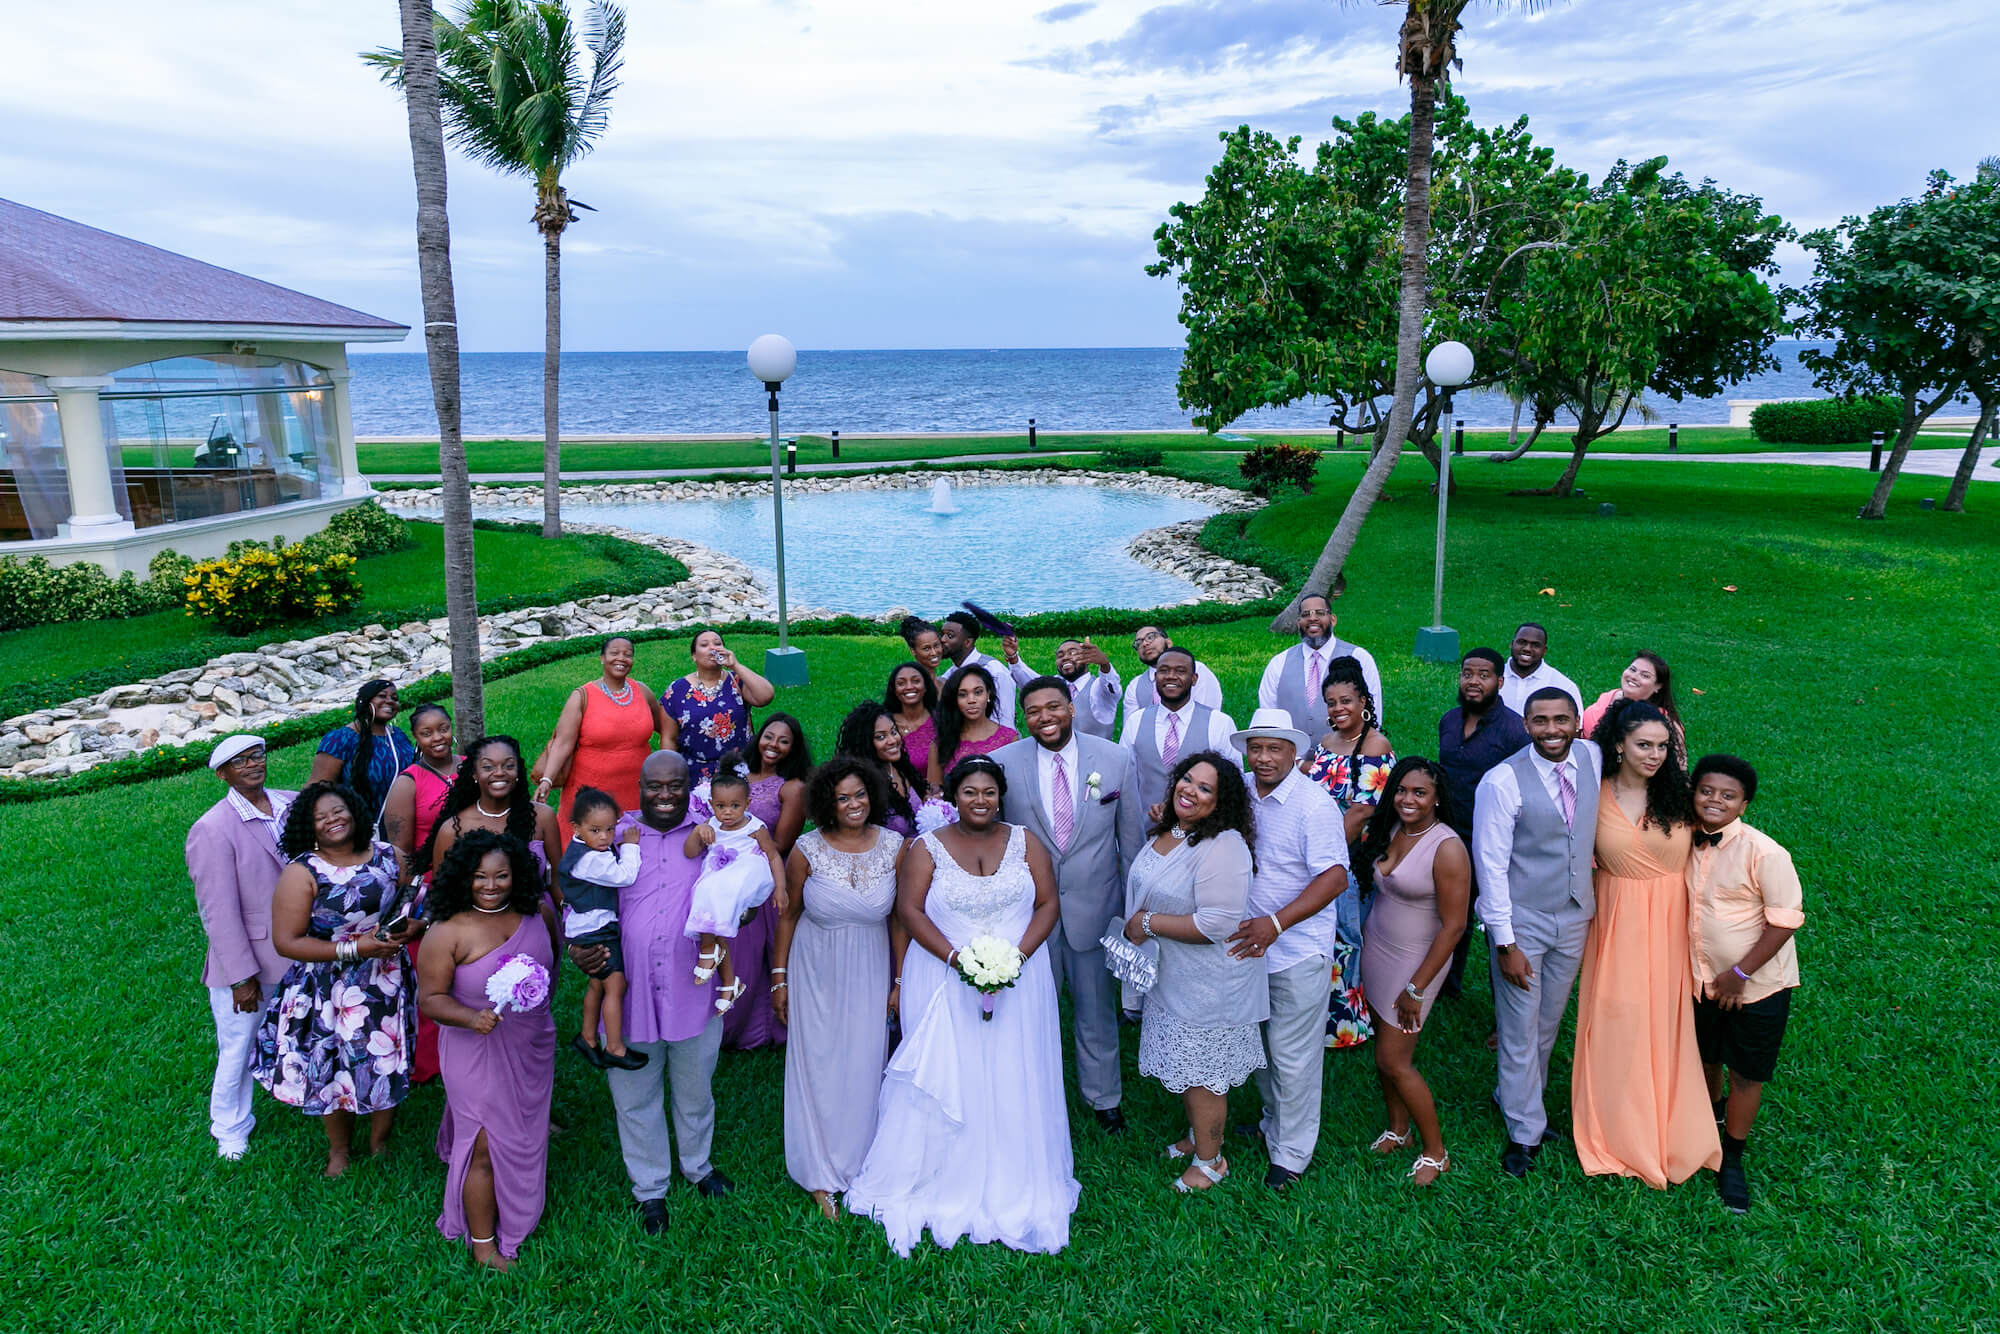 tressa-how-to-plan-a-destination-wedding-in-cancun-mexico-moon-palace-resort-black-destination-bride-destiland-desti-guide-to-destination-weddings-beach-wedding-family1.jpg